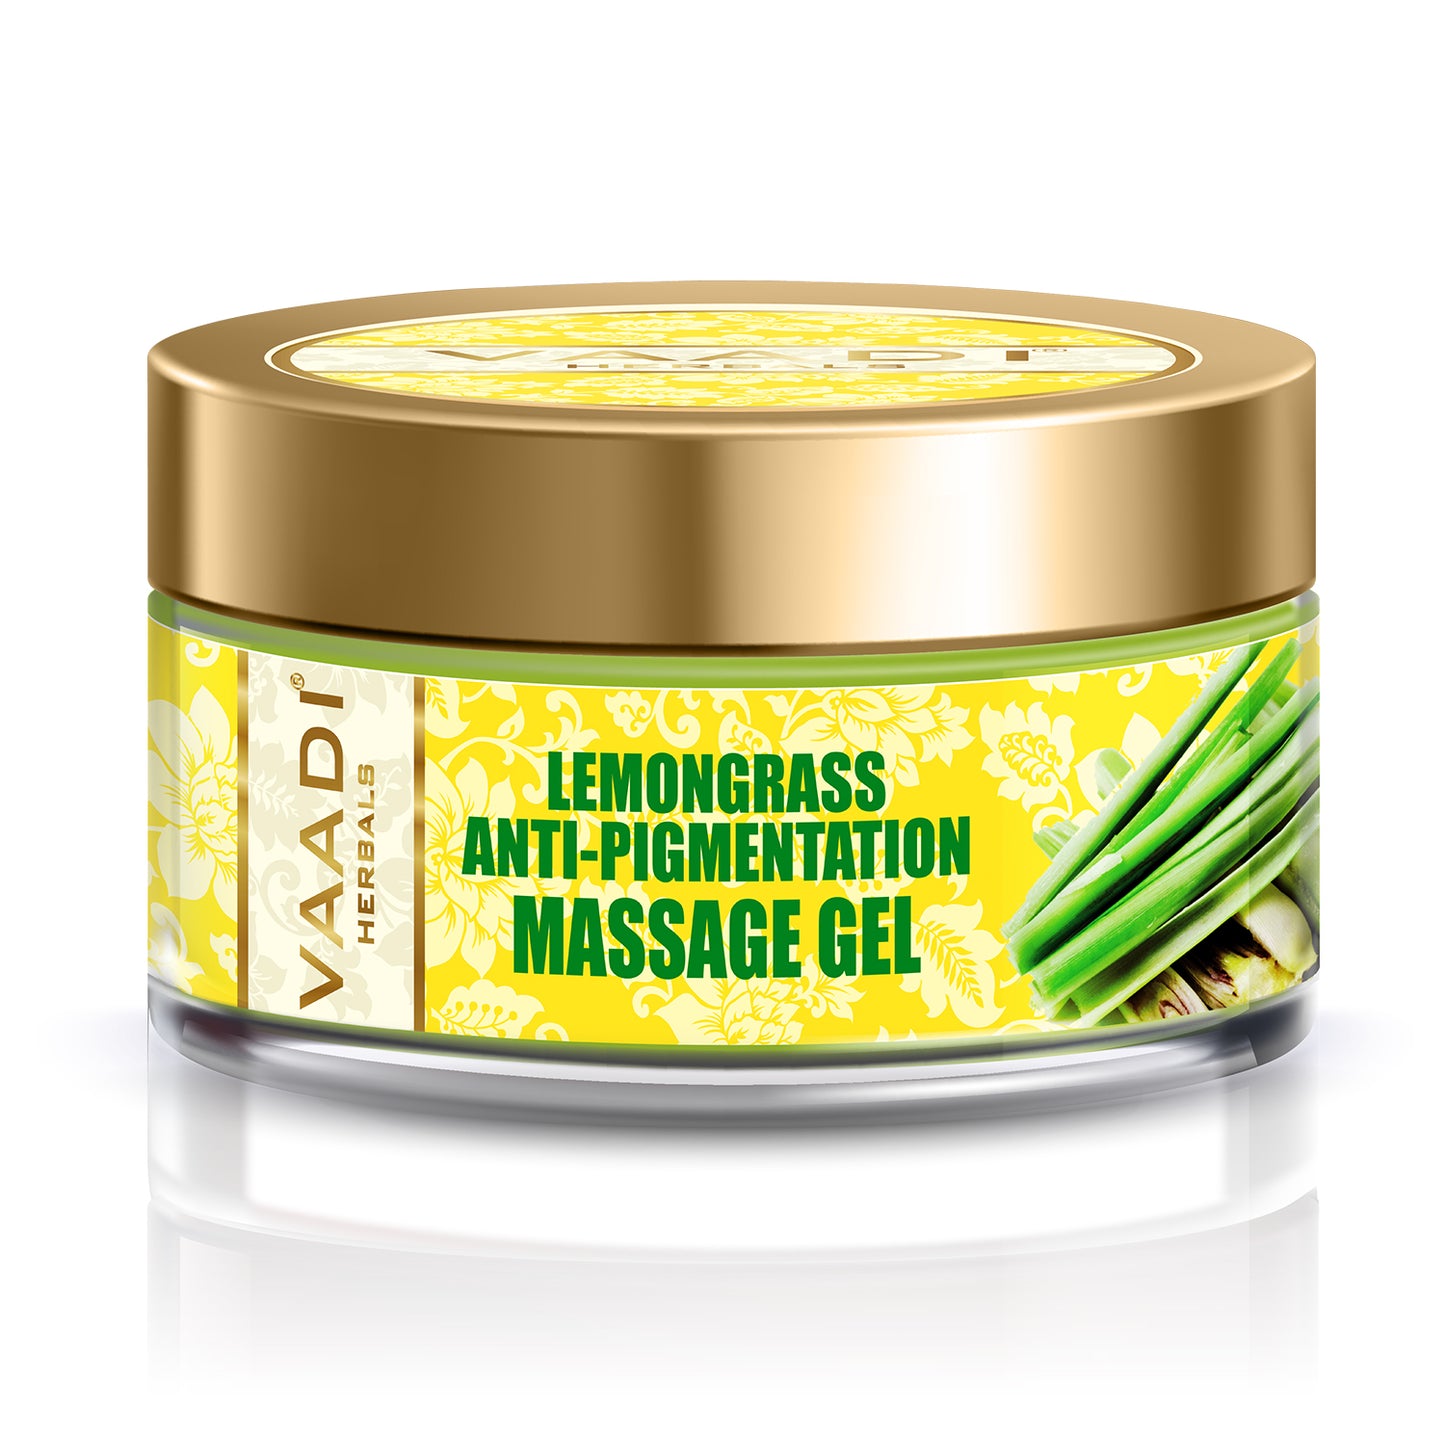 Anti Pigmentation Organic Lemongrass Massage Gel - Unclogs Pores - Makes Skin Smooth & Clear (50 gms / 2 oz)